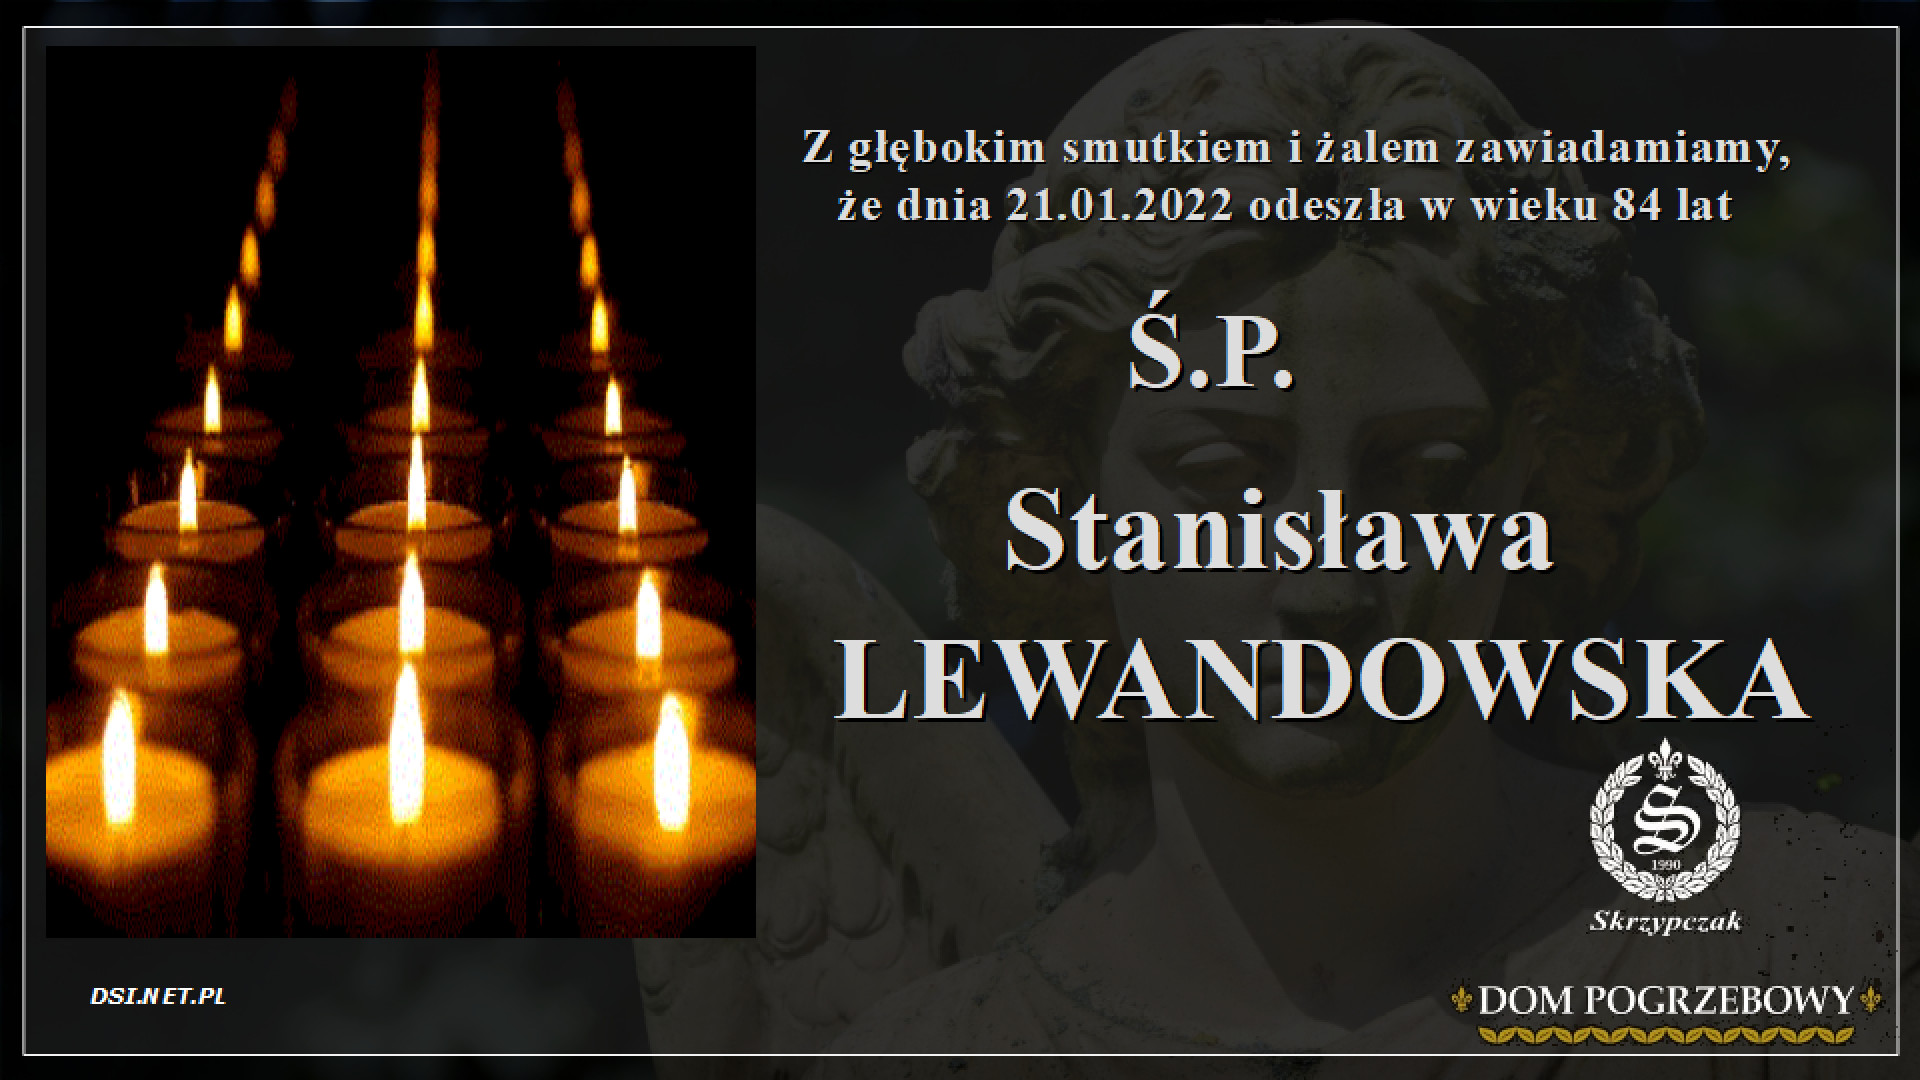 Ś.P. Stanisława Lewandowska